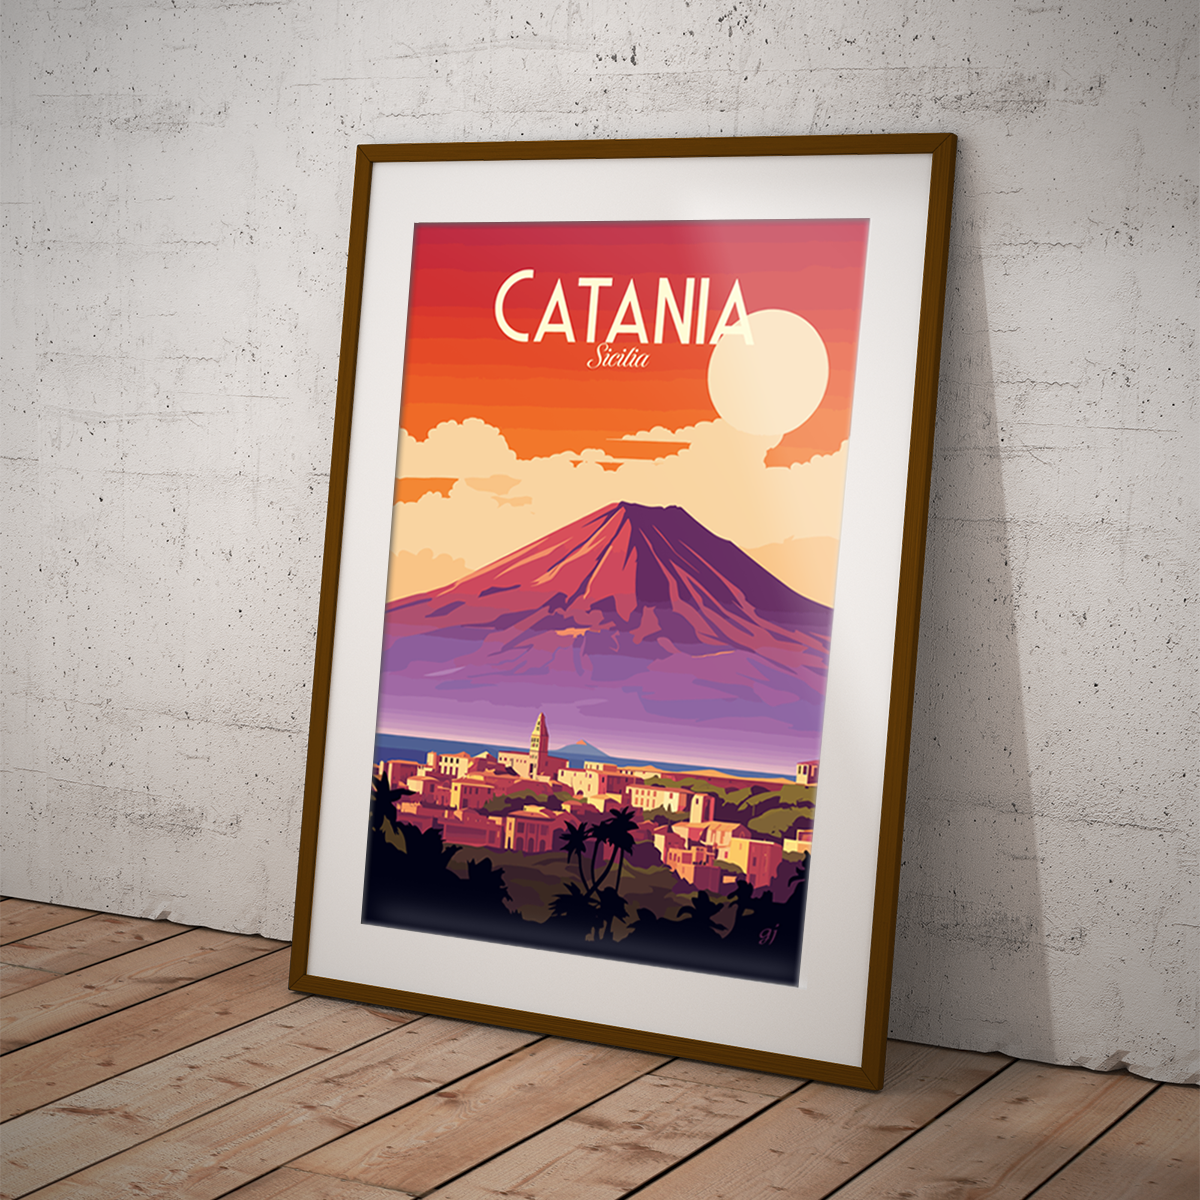 Catania poster by bon voyage design